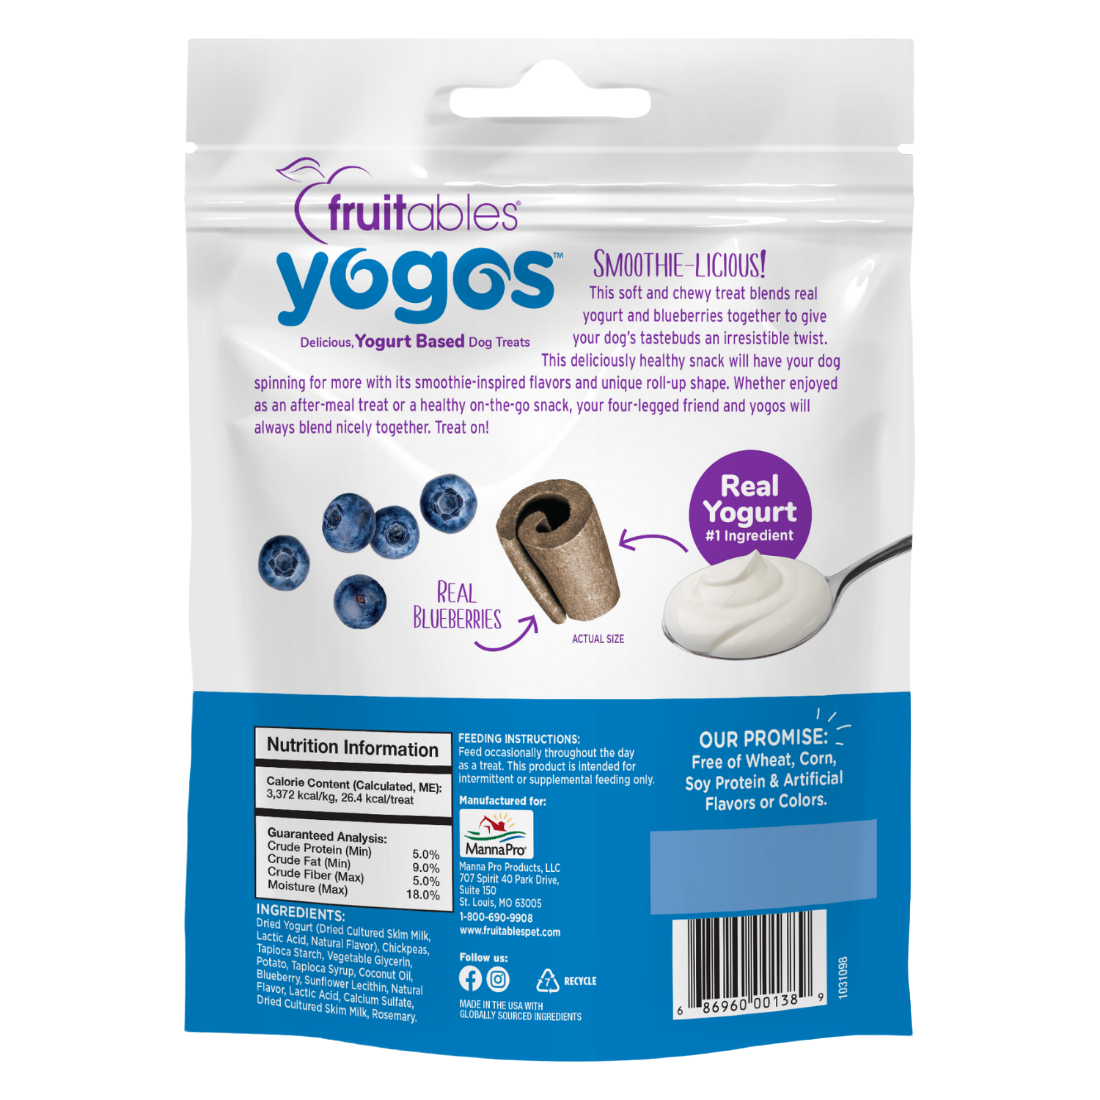 Fruitables 12 oz Yogos Blueberry Smoothie Dog Treats back packaging